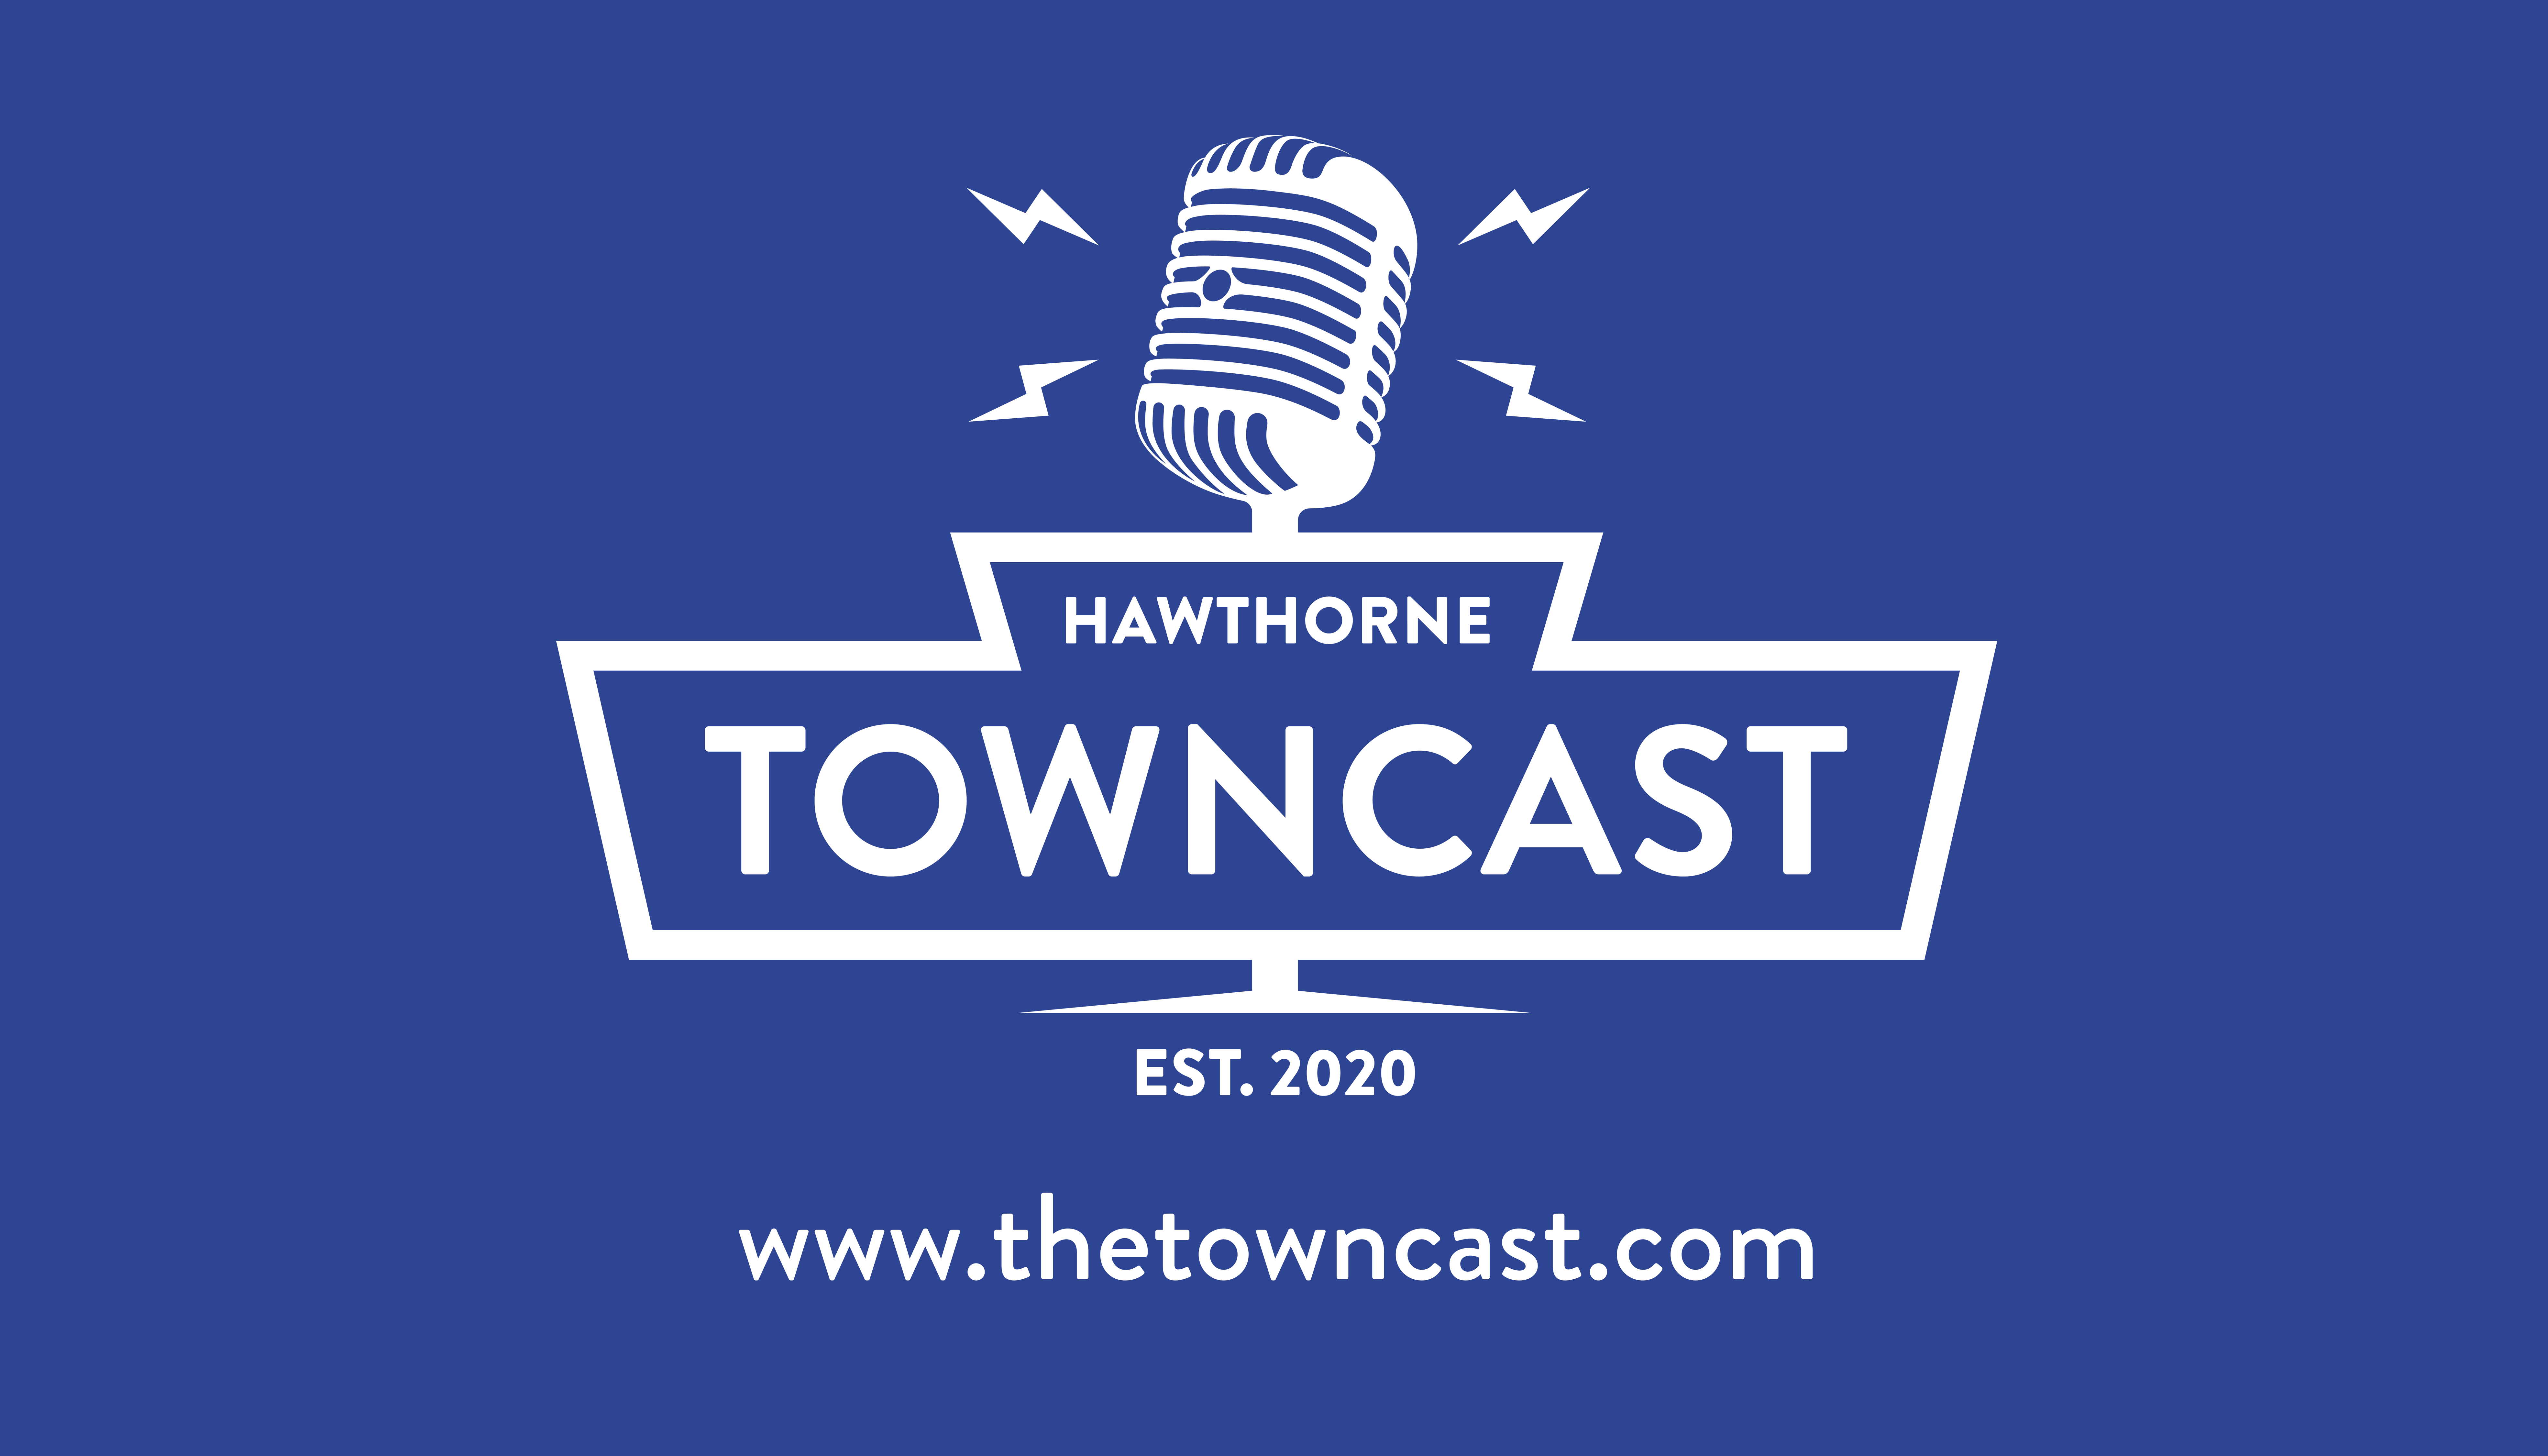 Hawthorne Towncast banner